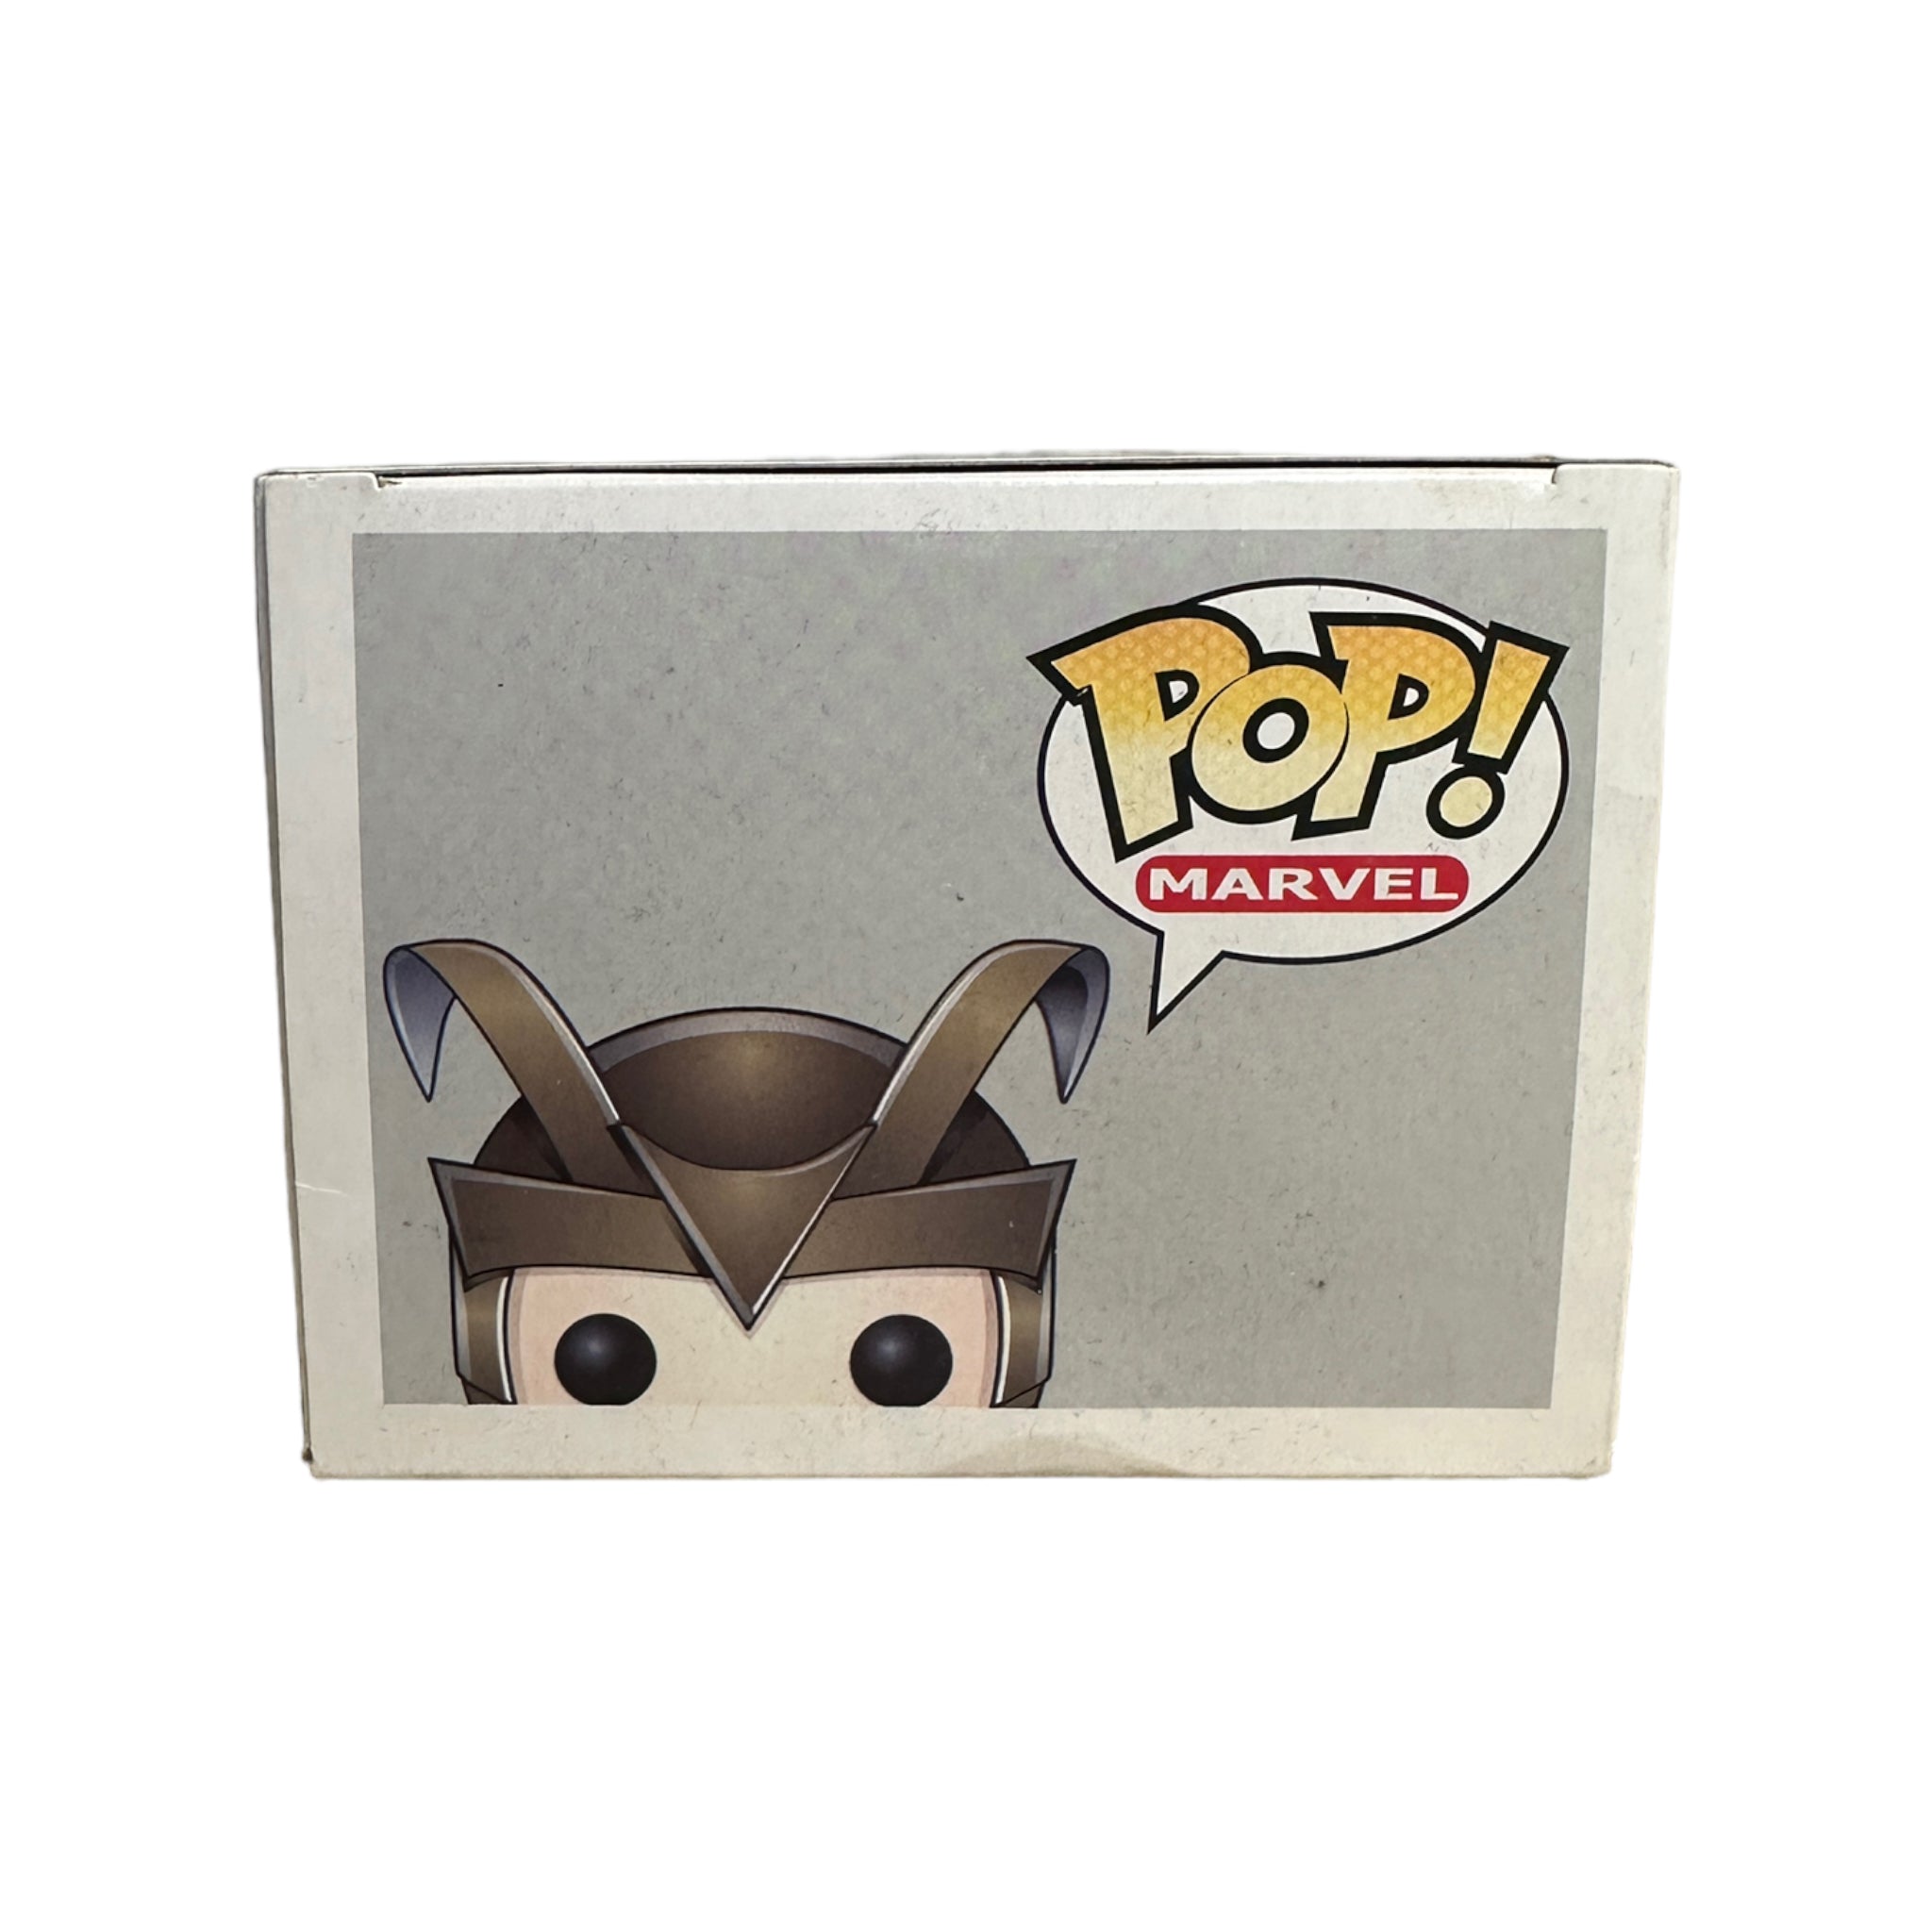 Loki #02 Funko Pop! - Thor The Mighty Avenger - 2010 Pop! - Condition 7/10